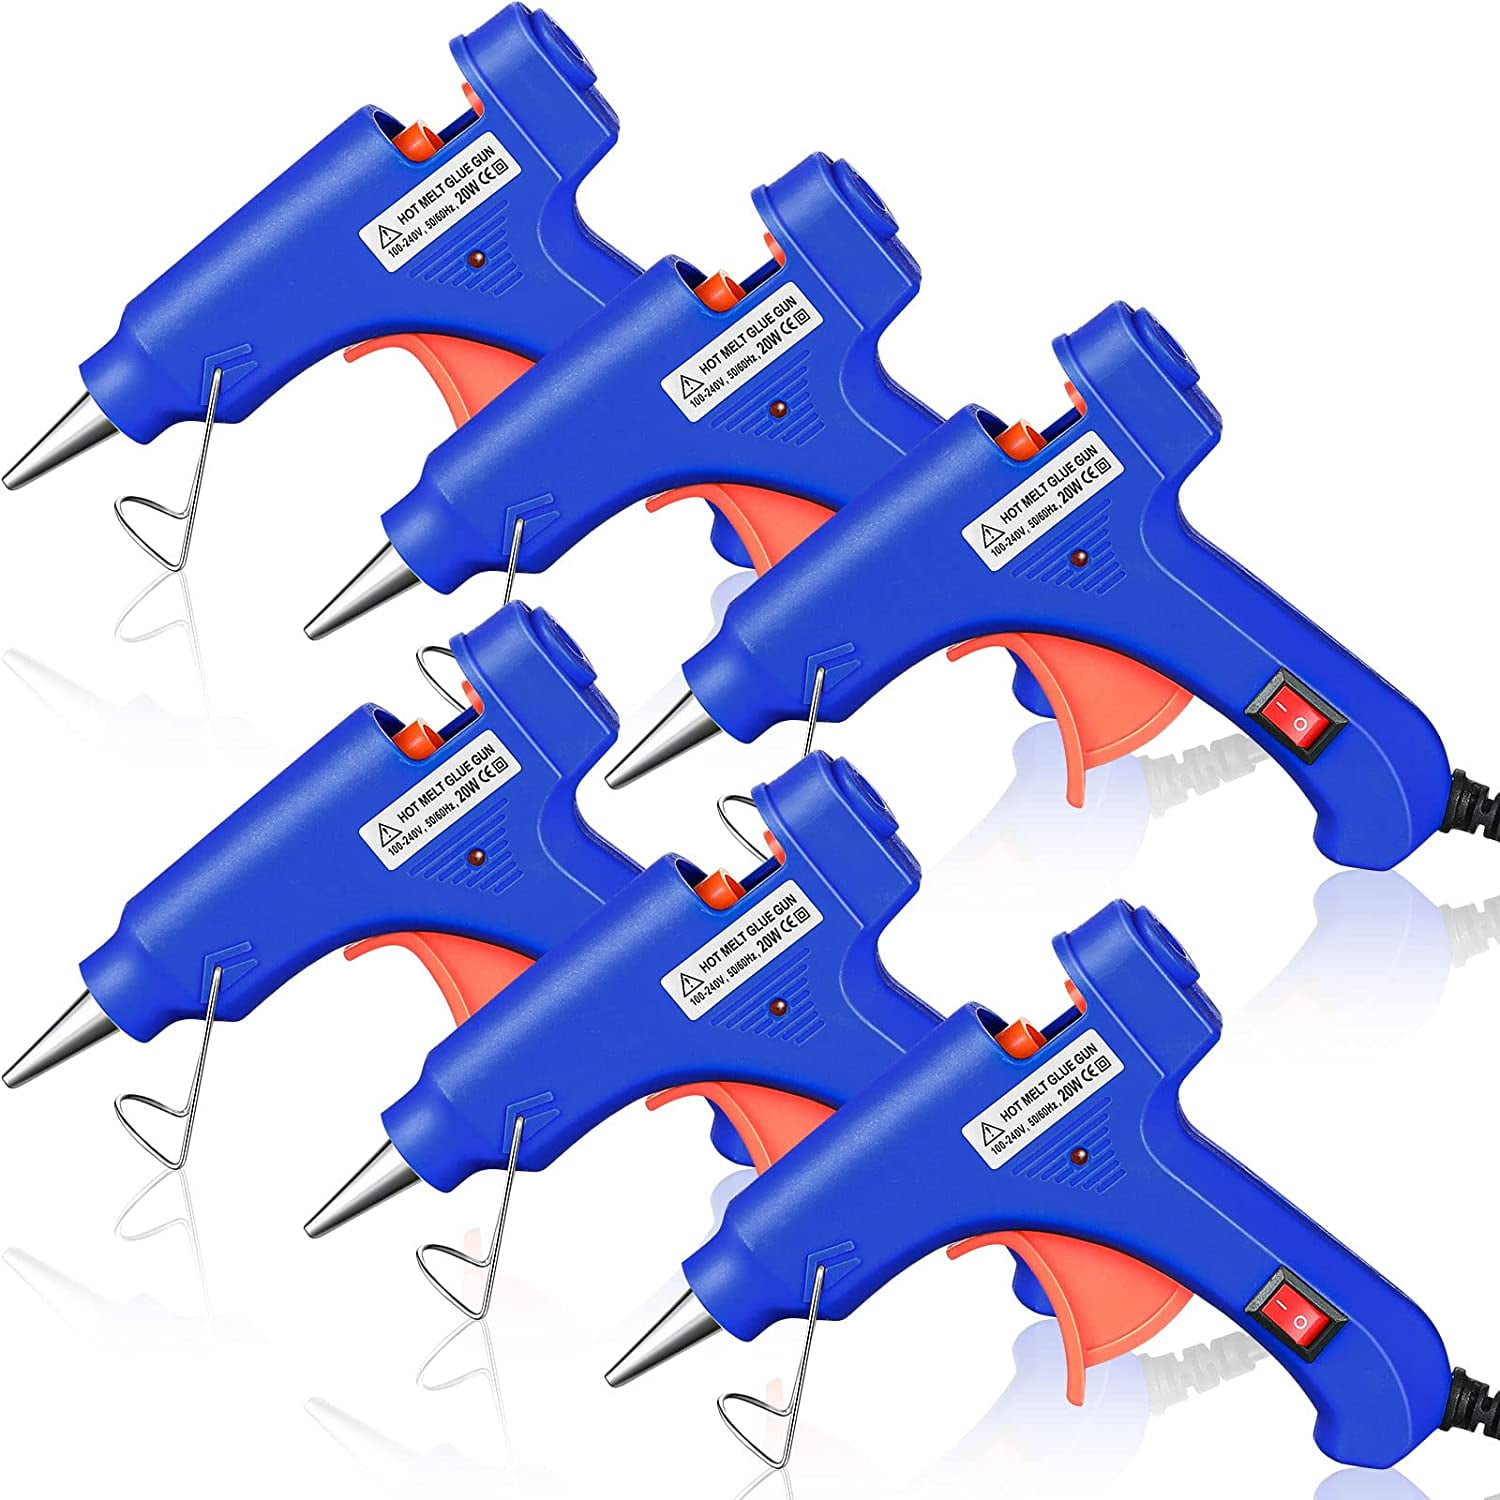 GuiBiLoo Mini Hot Glue Gun Set - 1 Minute Quick Repairs, 8Pack Small Melt  Glue Gun Kit with 30 Glue Sticks for School Kids DIY Arts Crafts Home (Blue